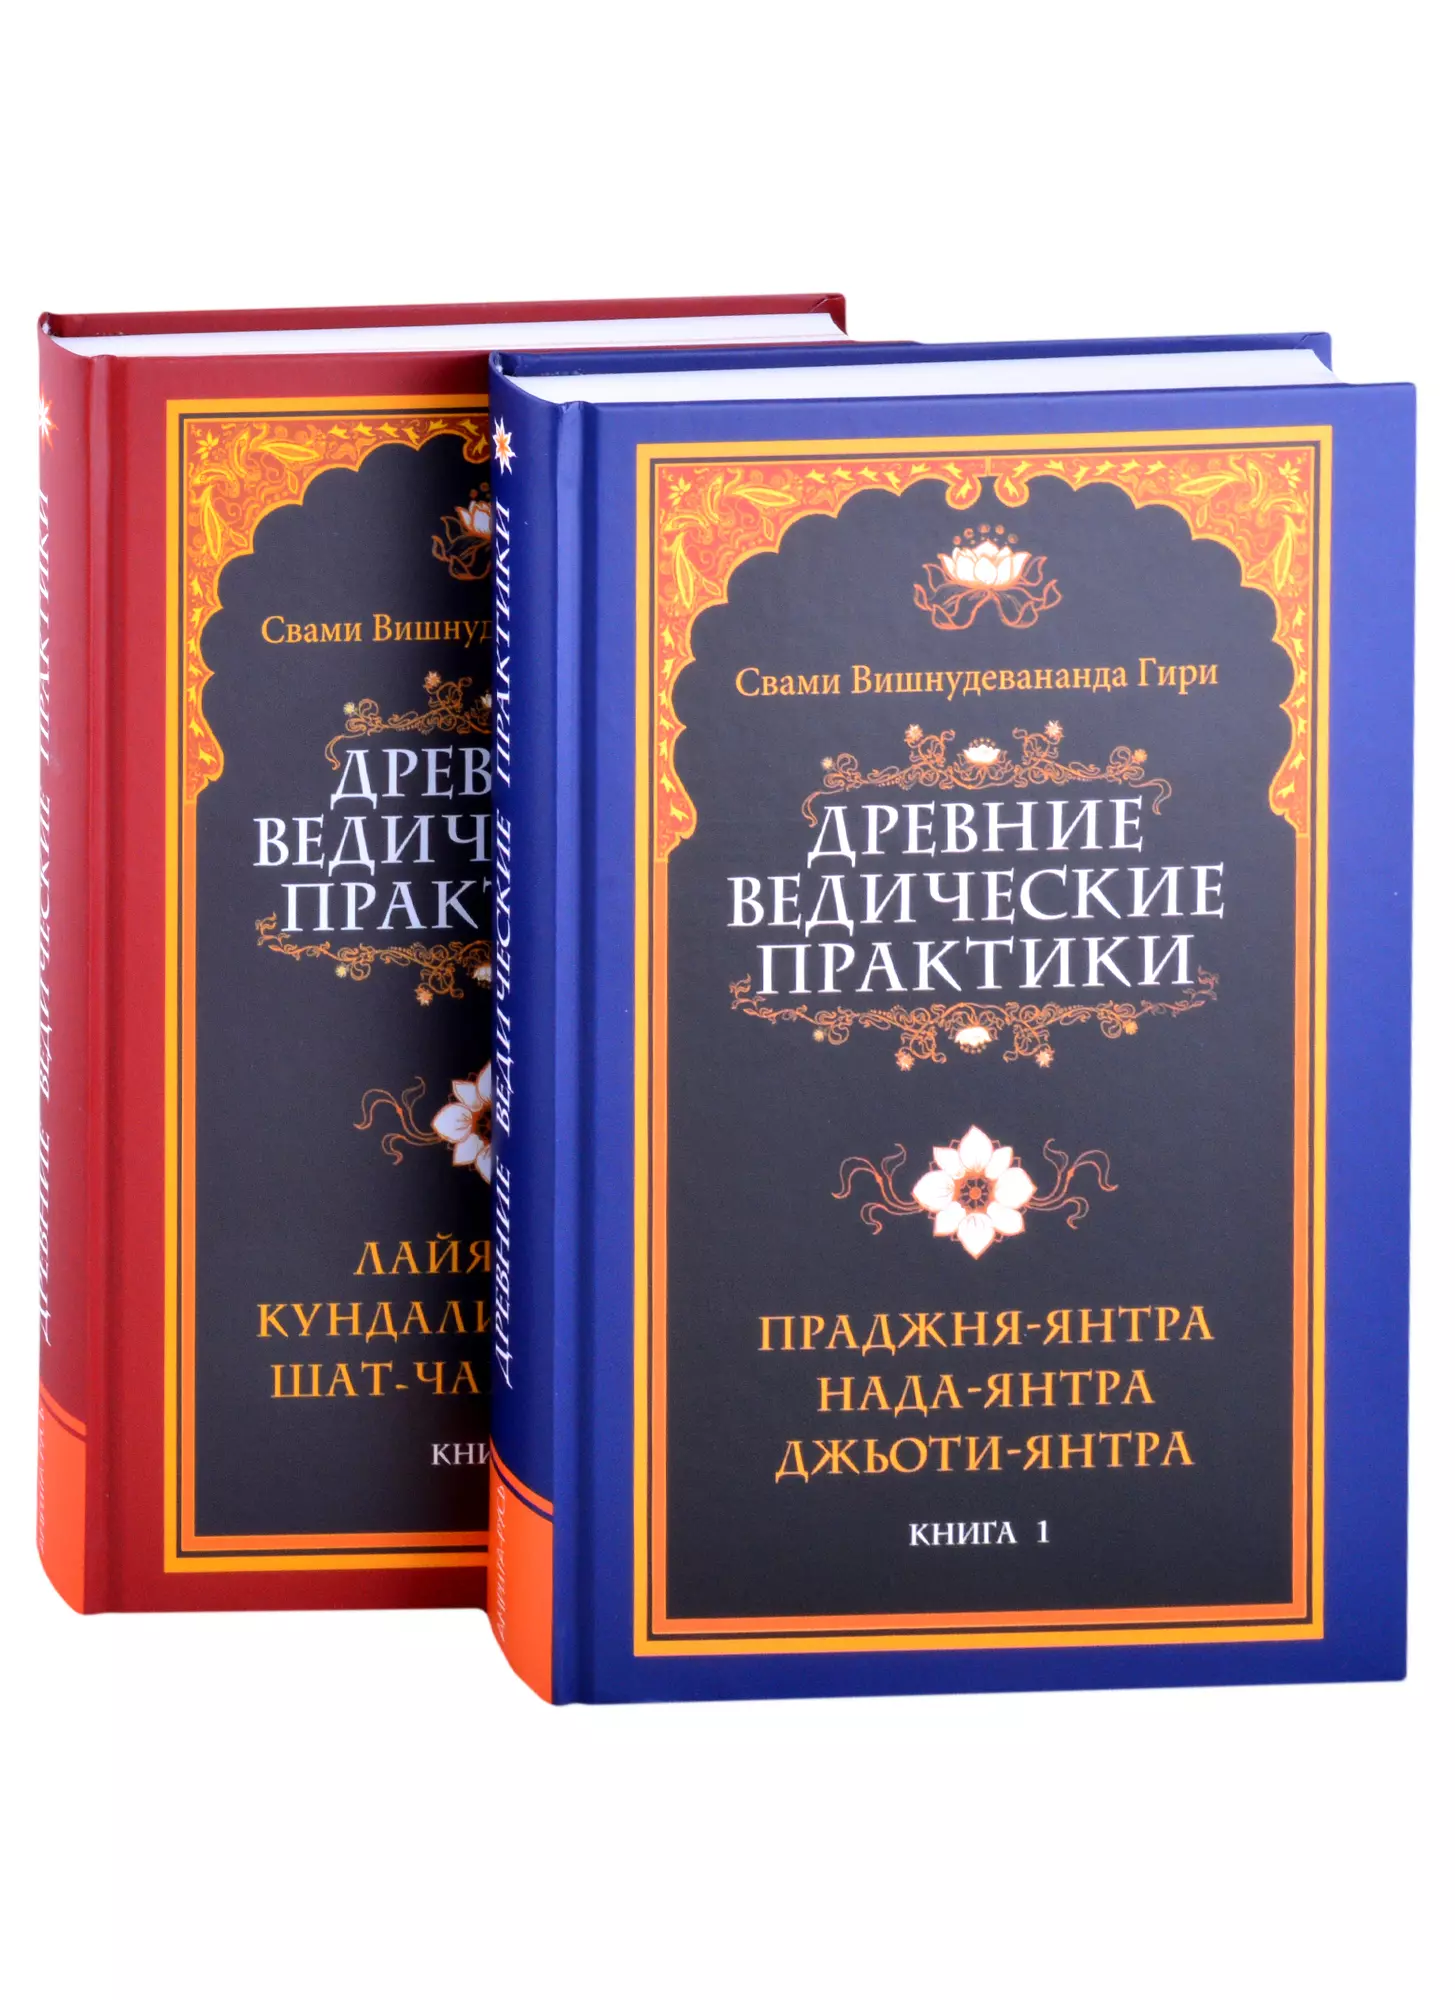 Древние ведические практики (комплект из 2-х книг) вишнудевананда гири шри гуру свами древние ведические практики комплект из 2 х книг